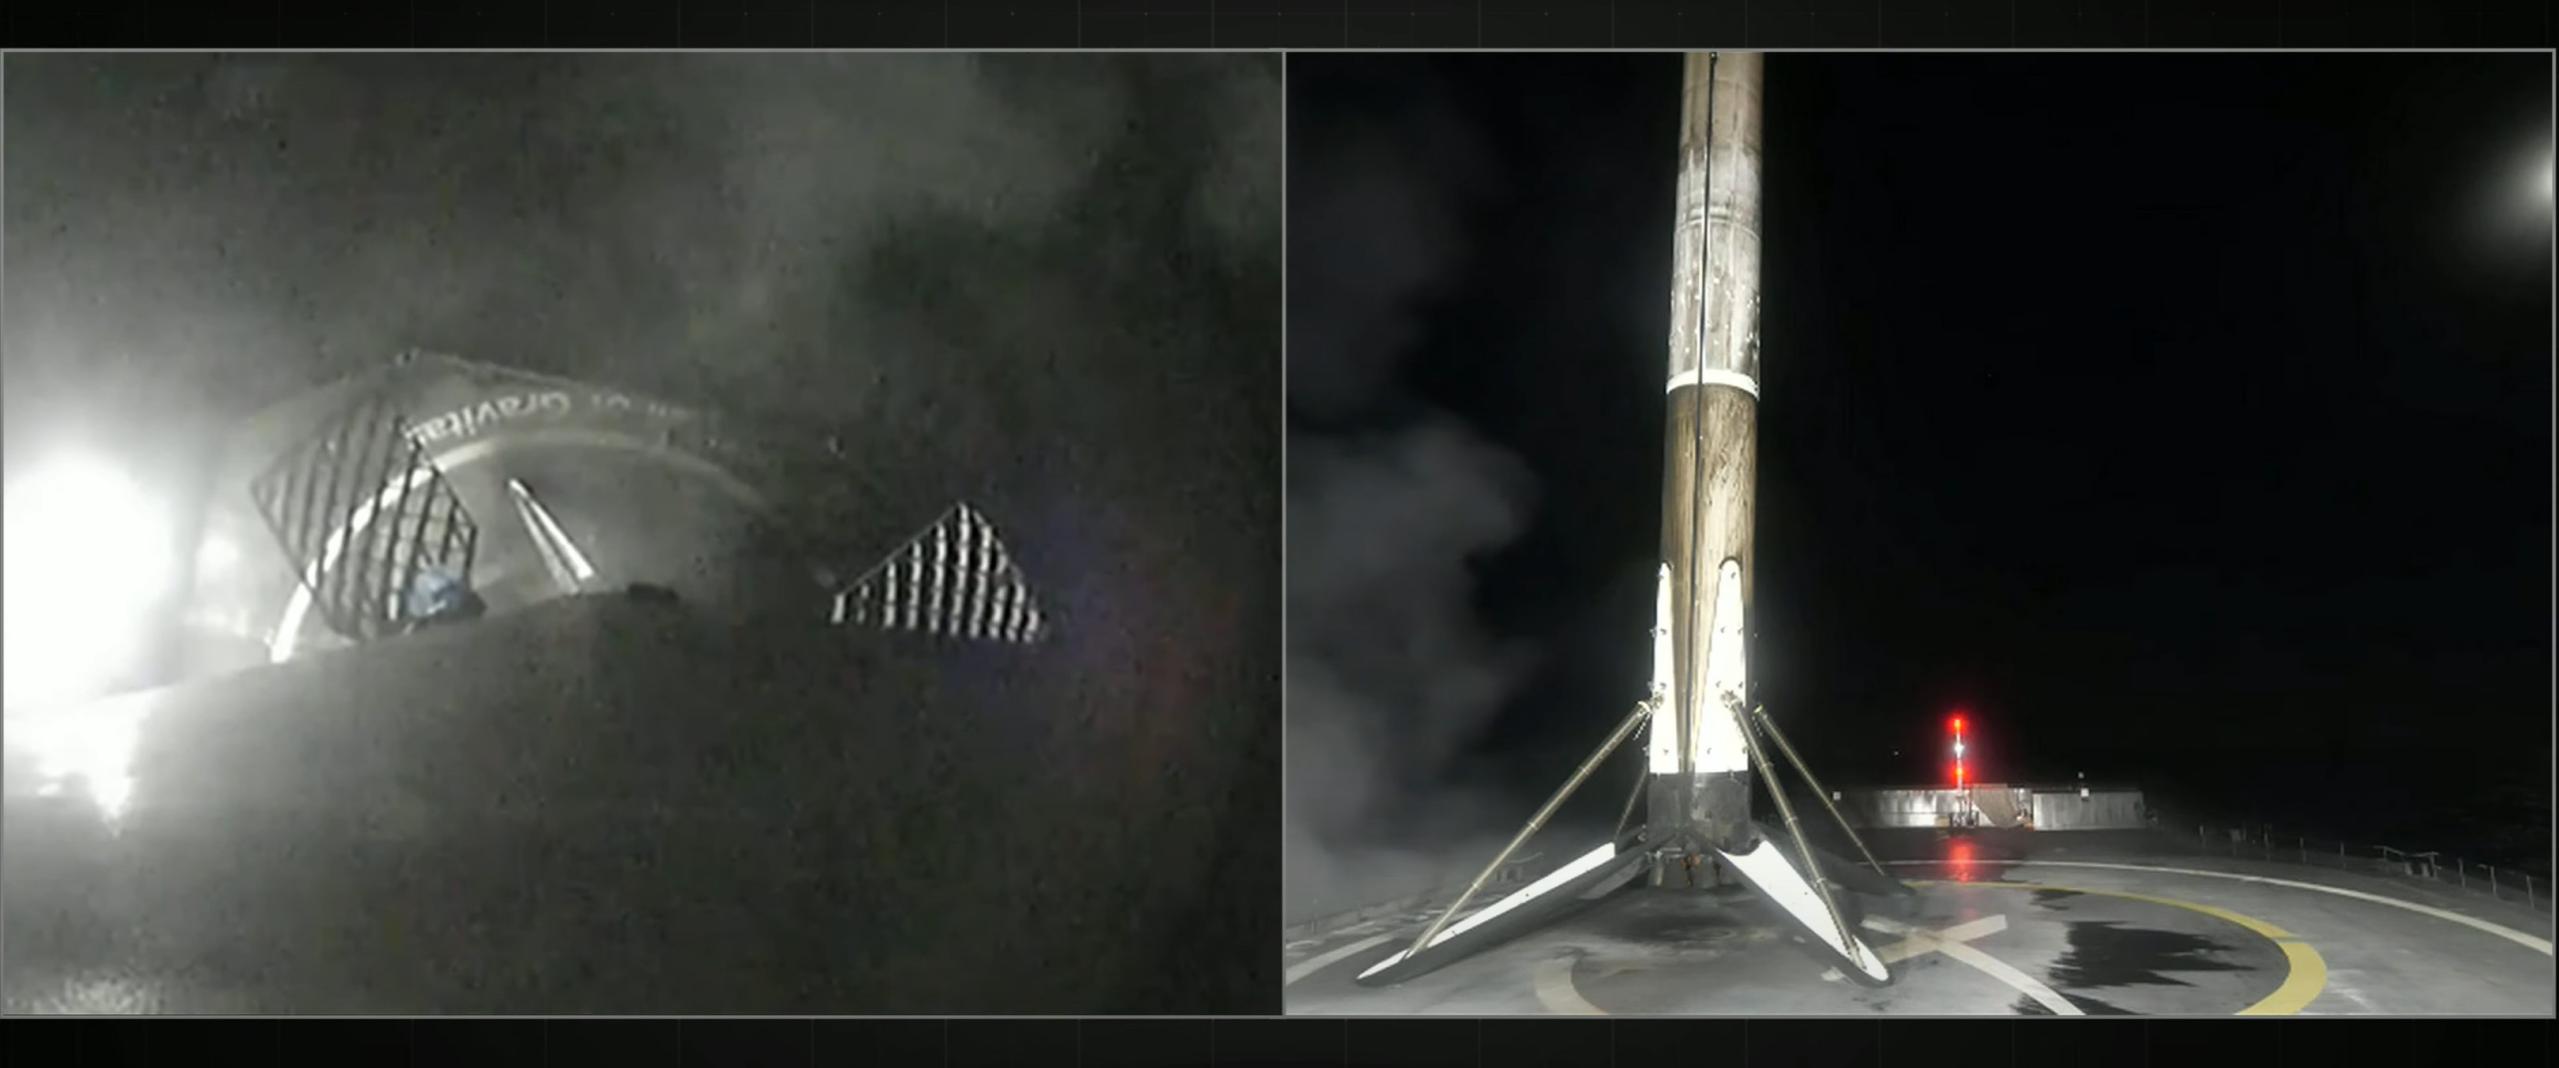 Starlink 4-26 F9 B1073 39A 080922 webcast (SpaceX) landing 2 (c)